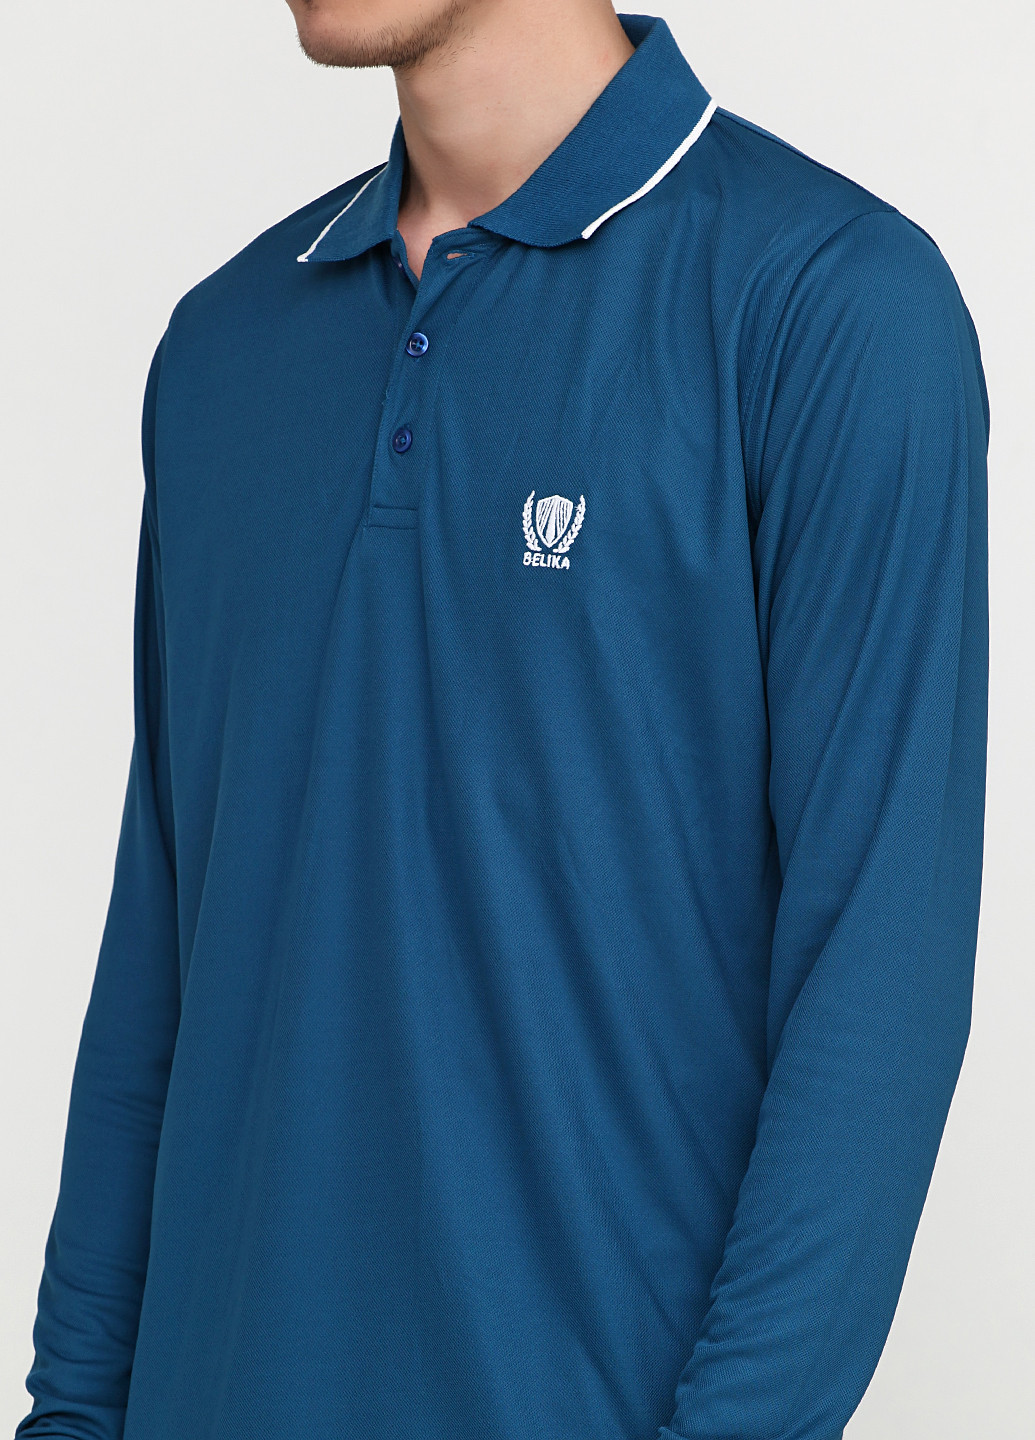 Синяя футболка-поло для мужчин Belika с логотипом